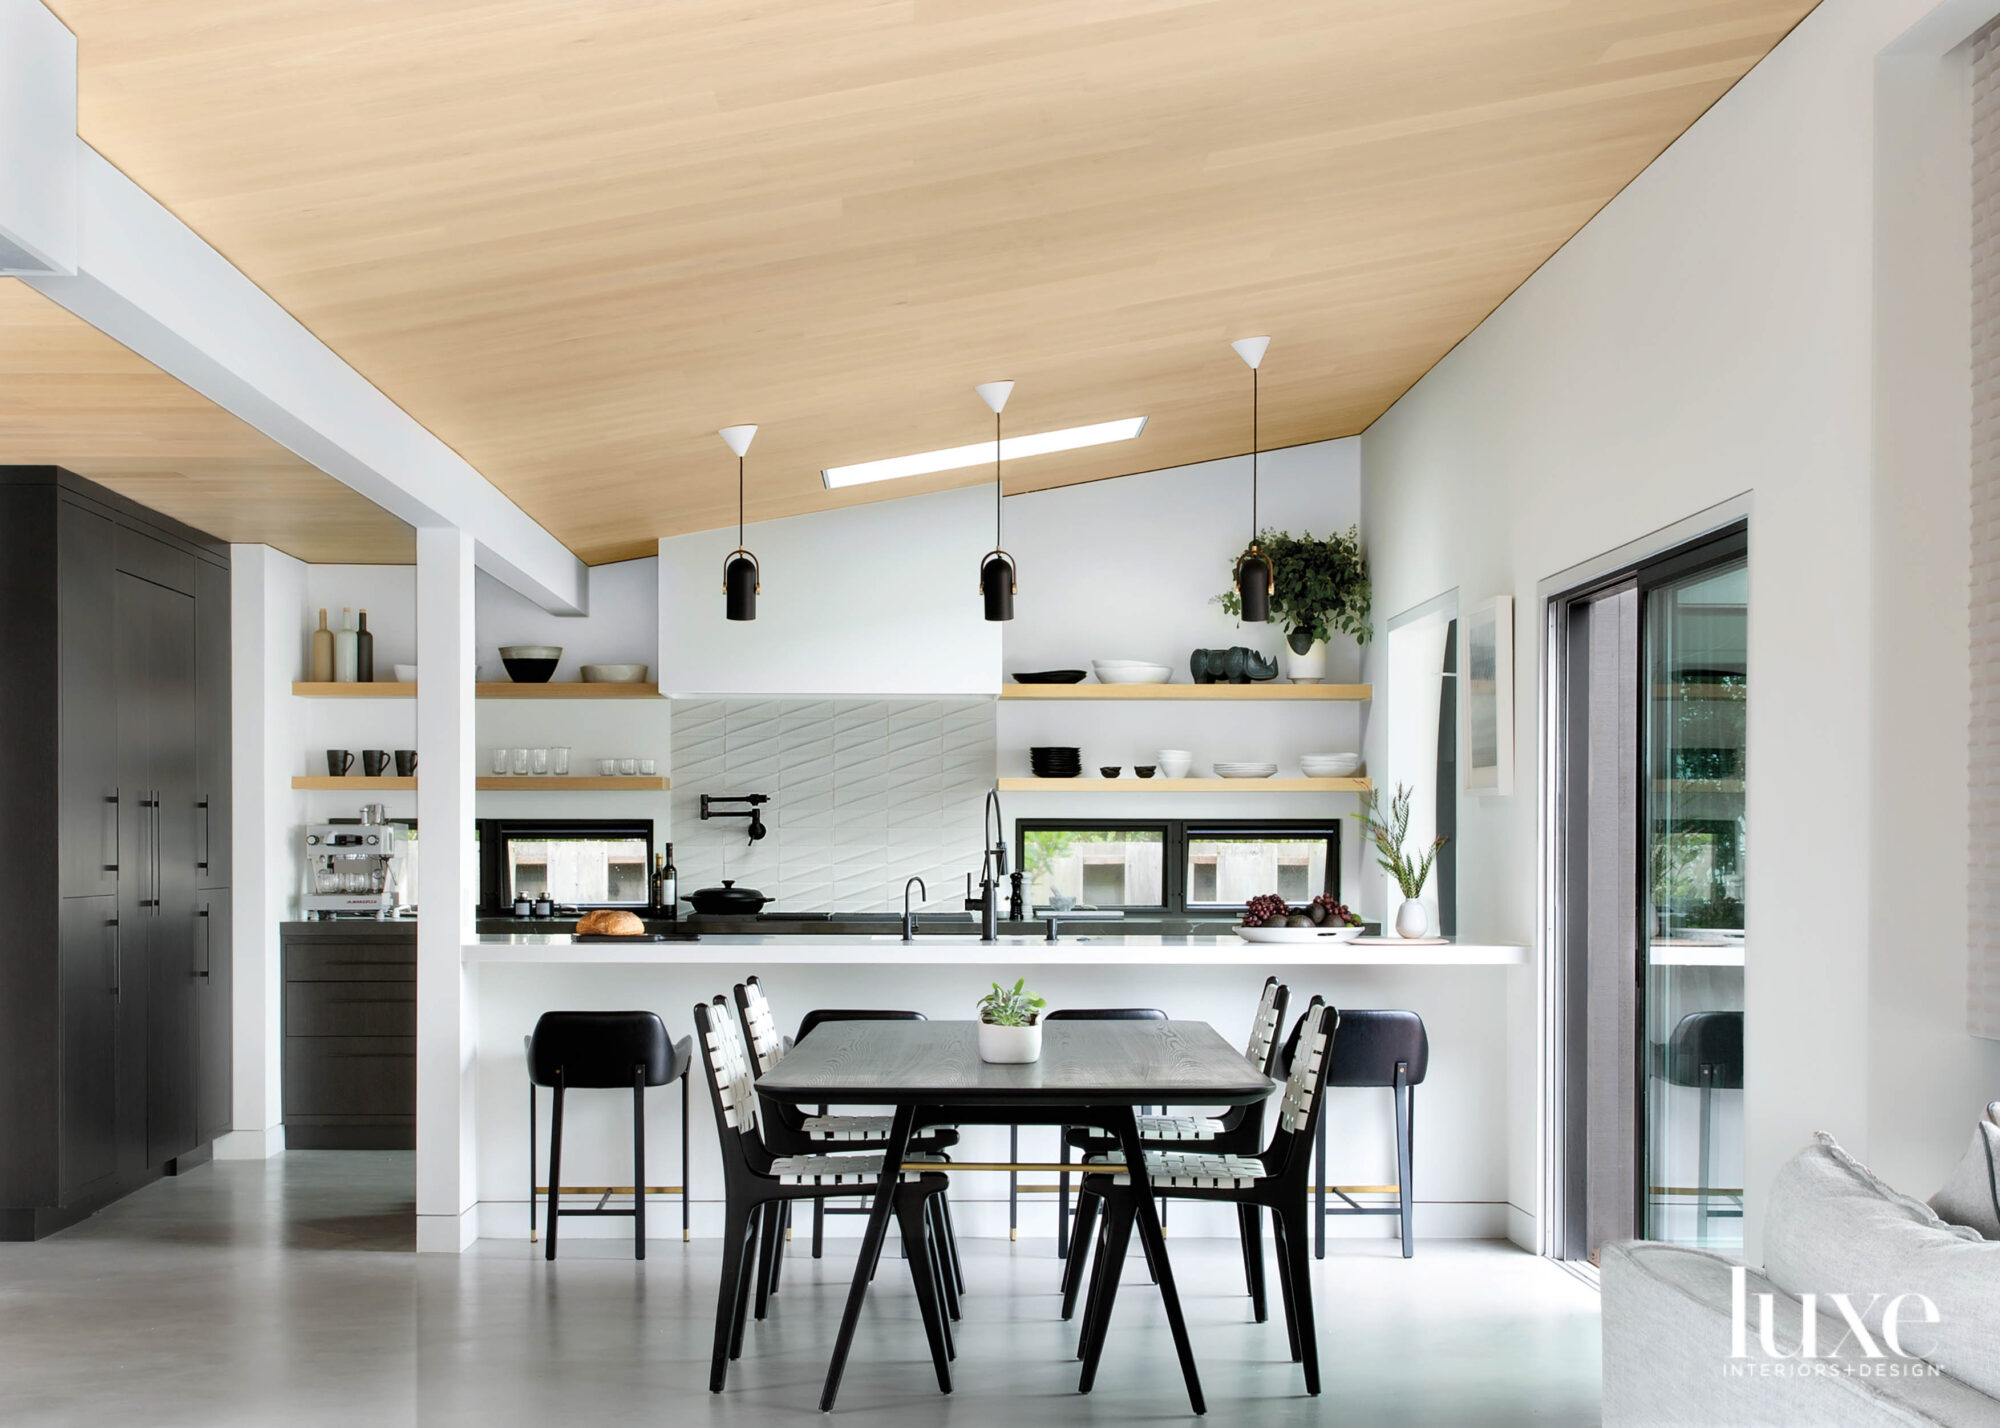 neutral minimalist kitchen with black accents and pattern backsplash